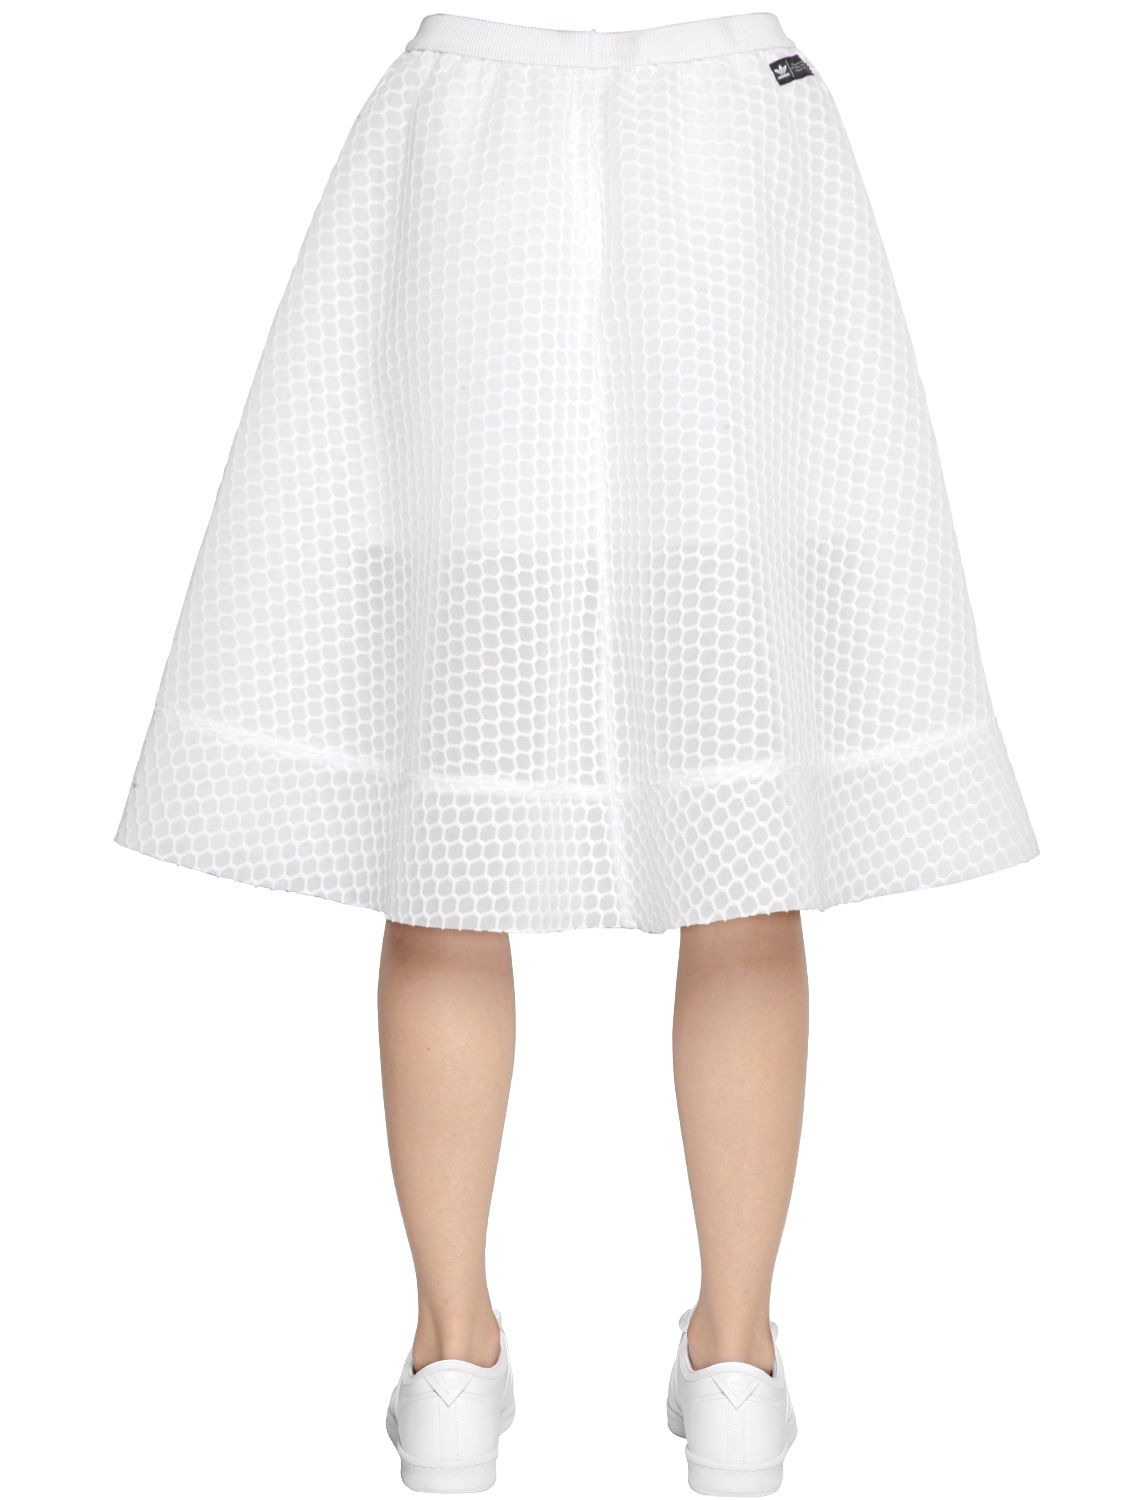 adidas Originals A-line Honeycomb Mesh Skirt in White | Lyst